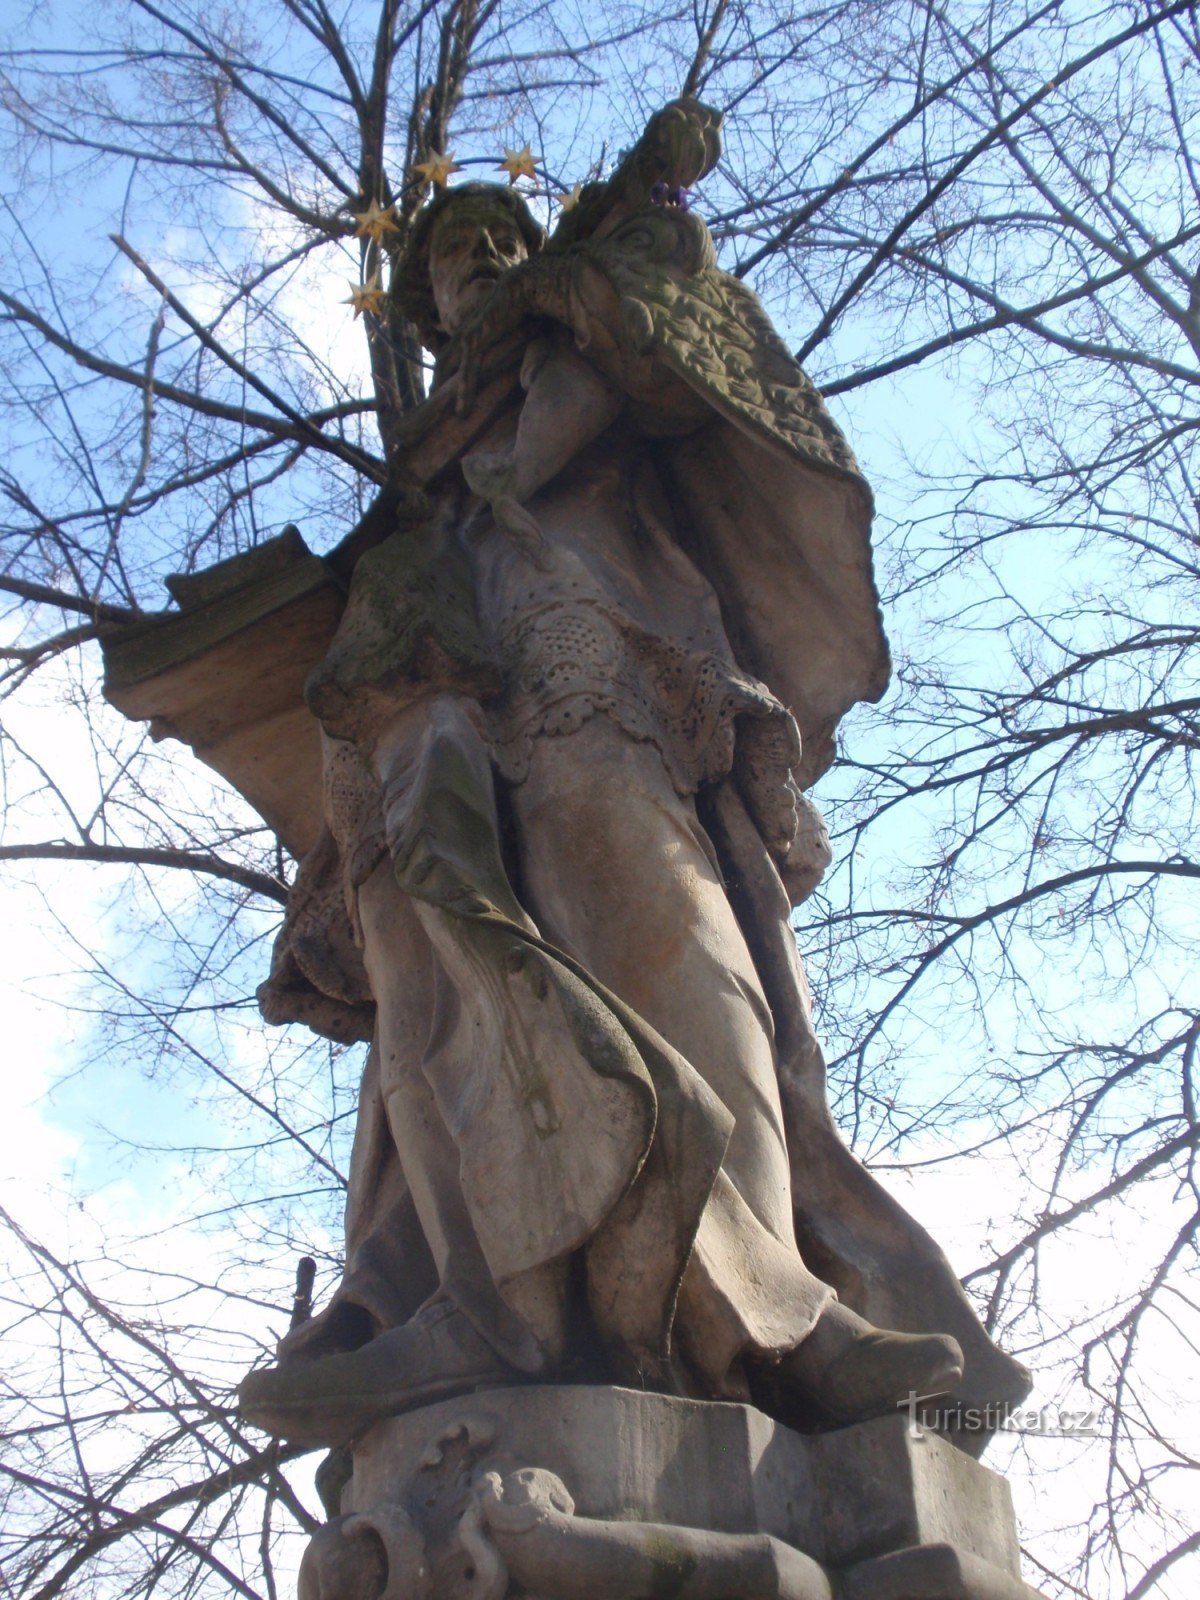 Statuia Sf. Jan Nepomucký în Olomouc-Chválkovice